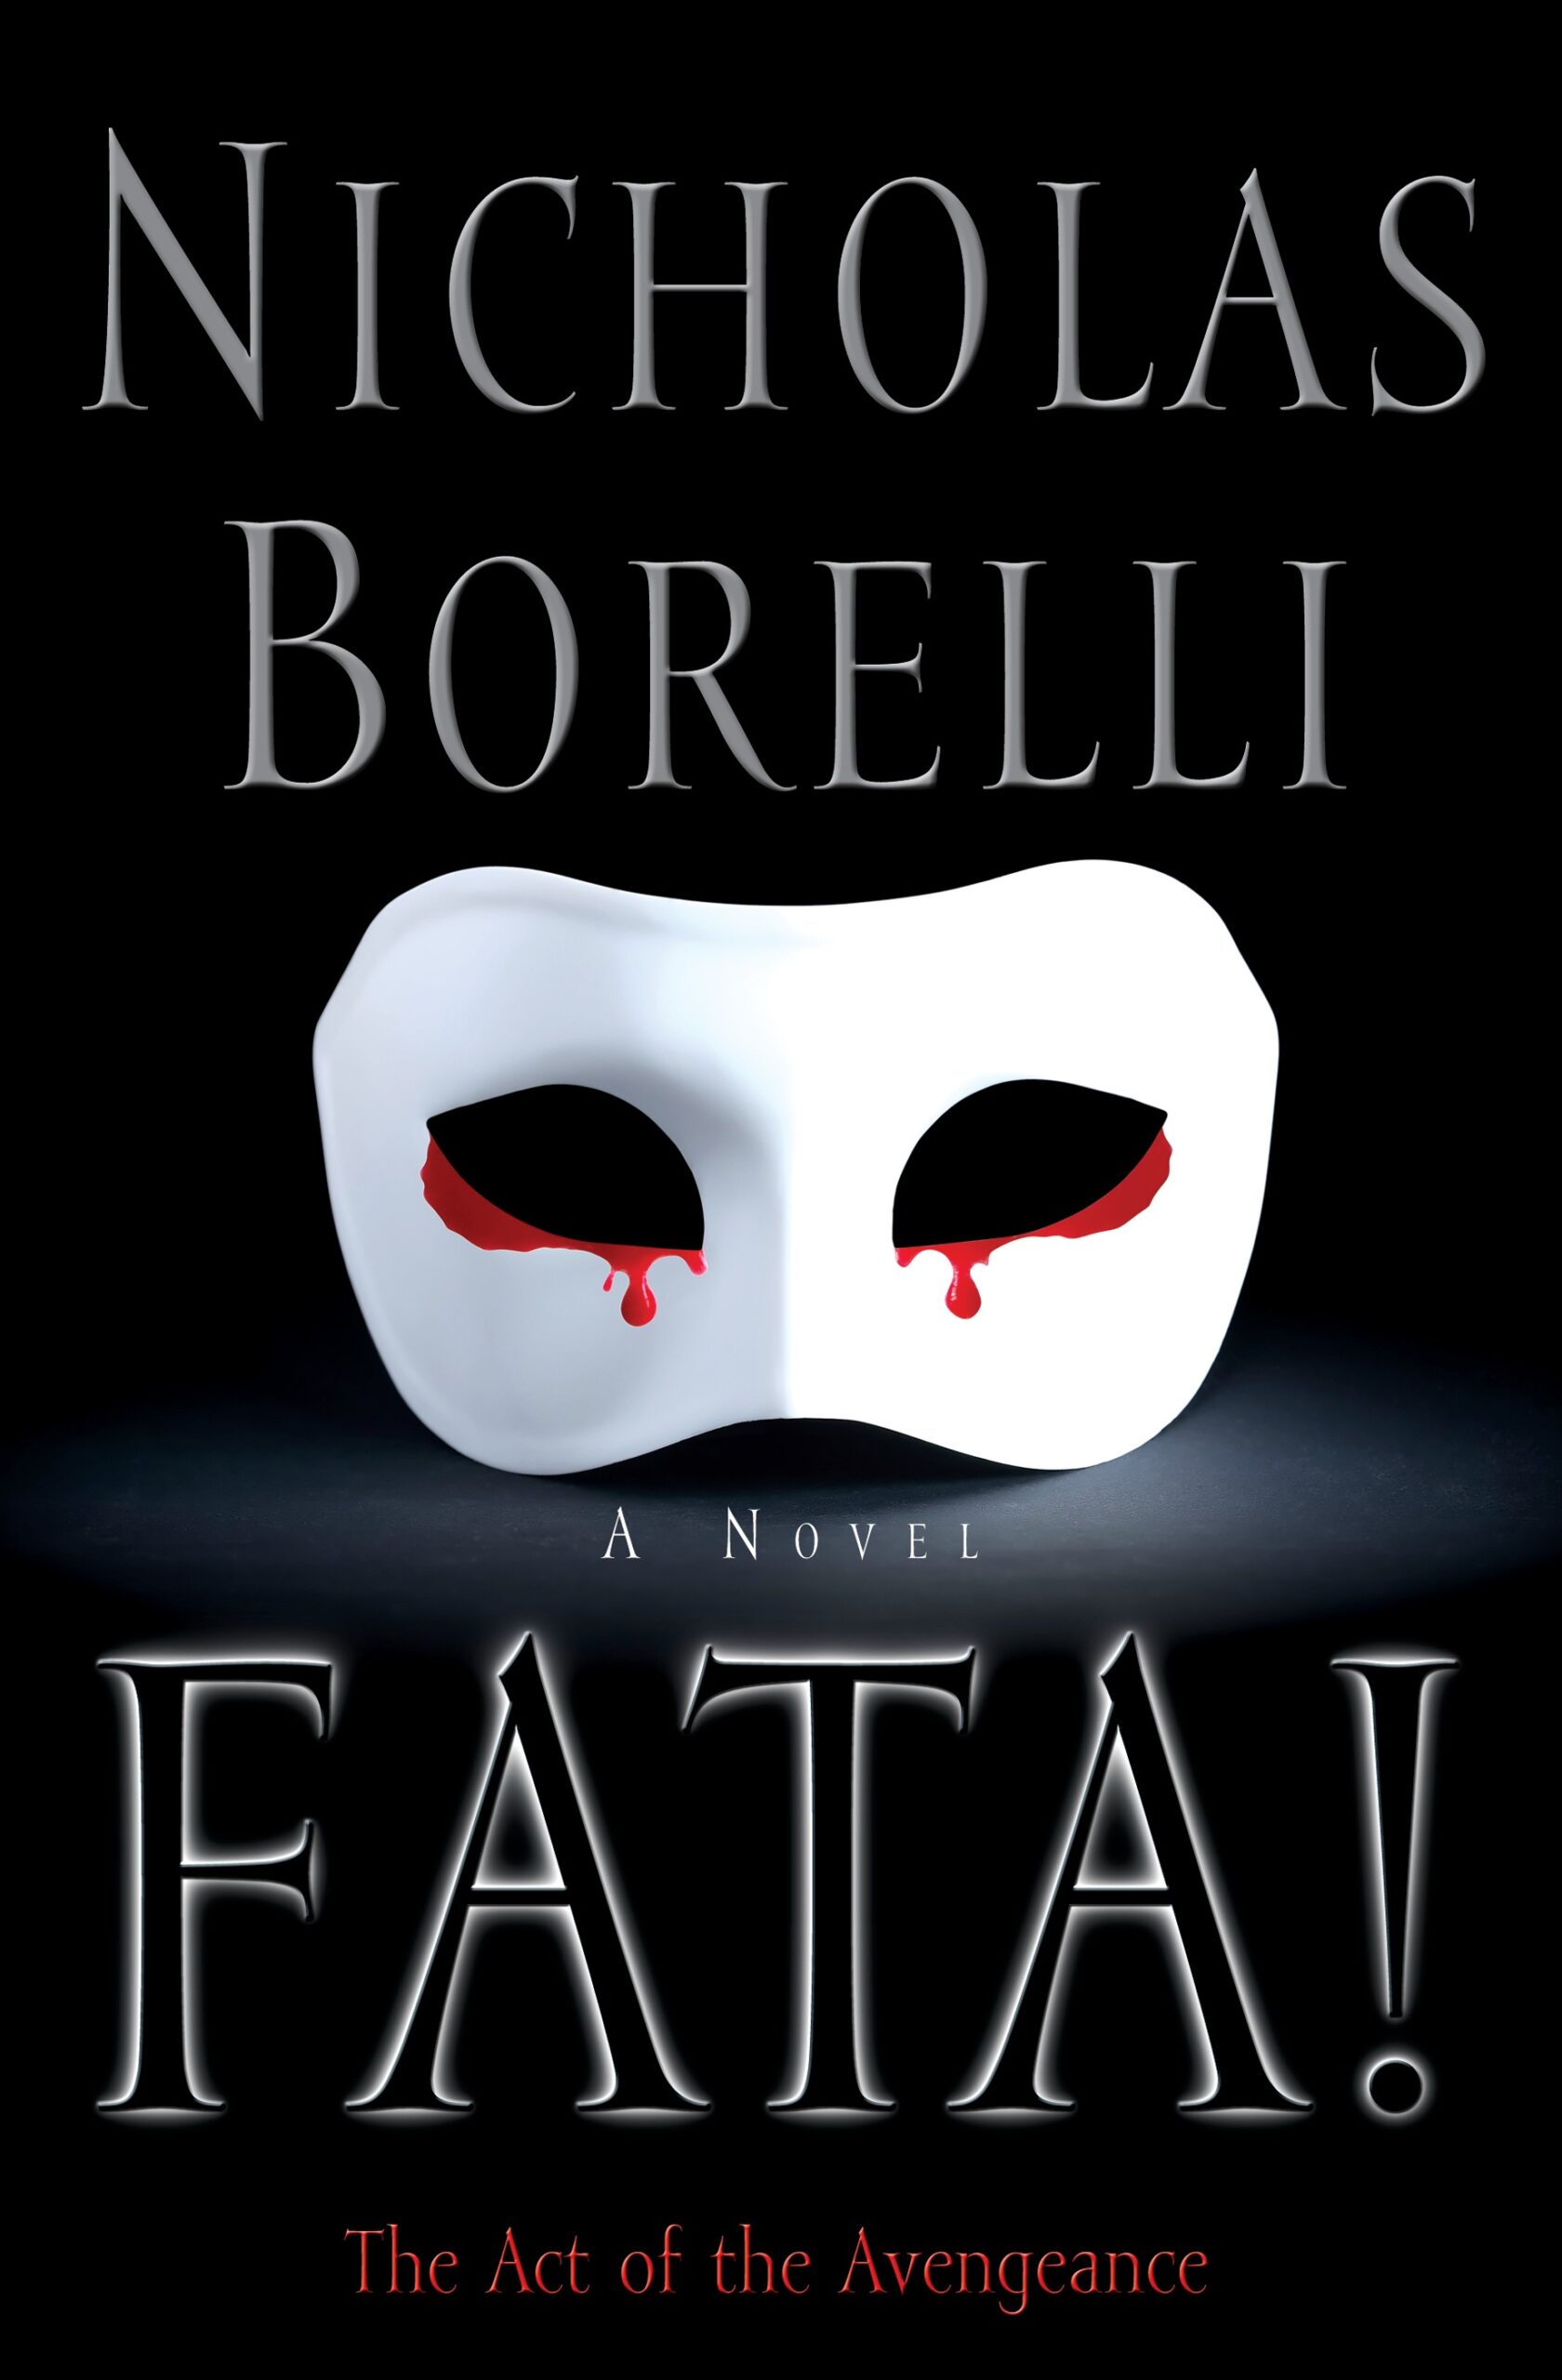 Nicholas Borelli book cover of Fata! The Act of the Avengeance